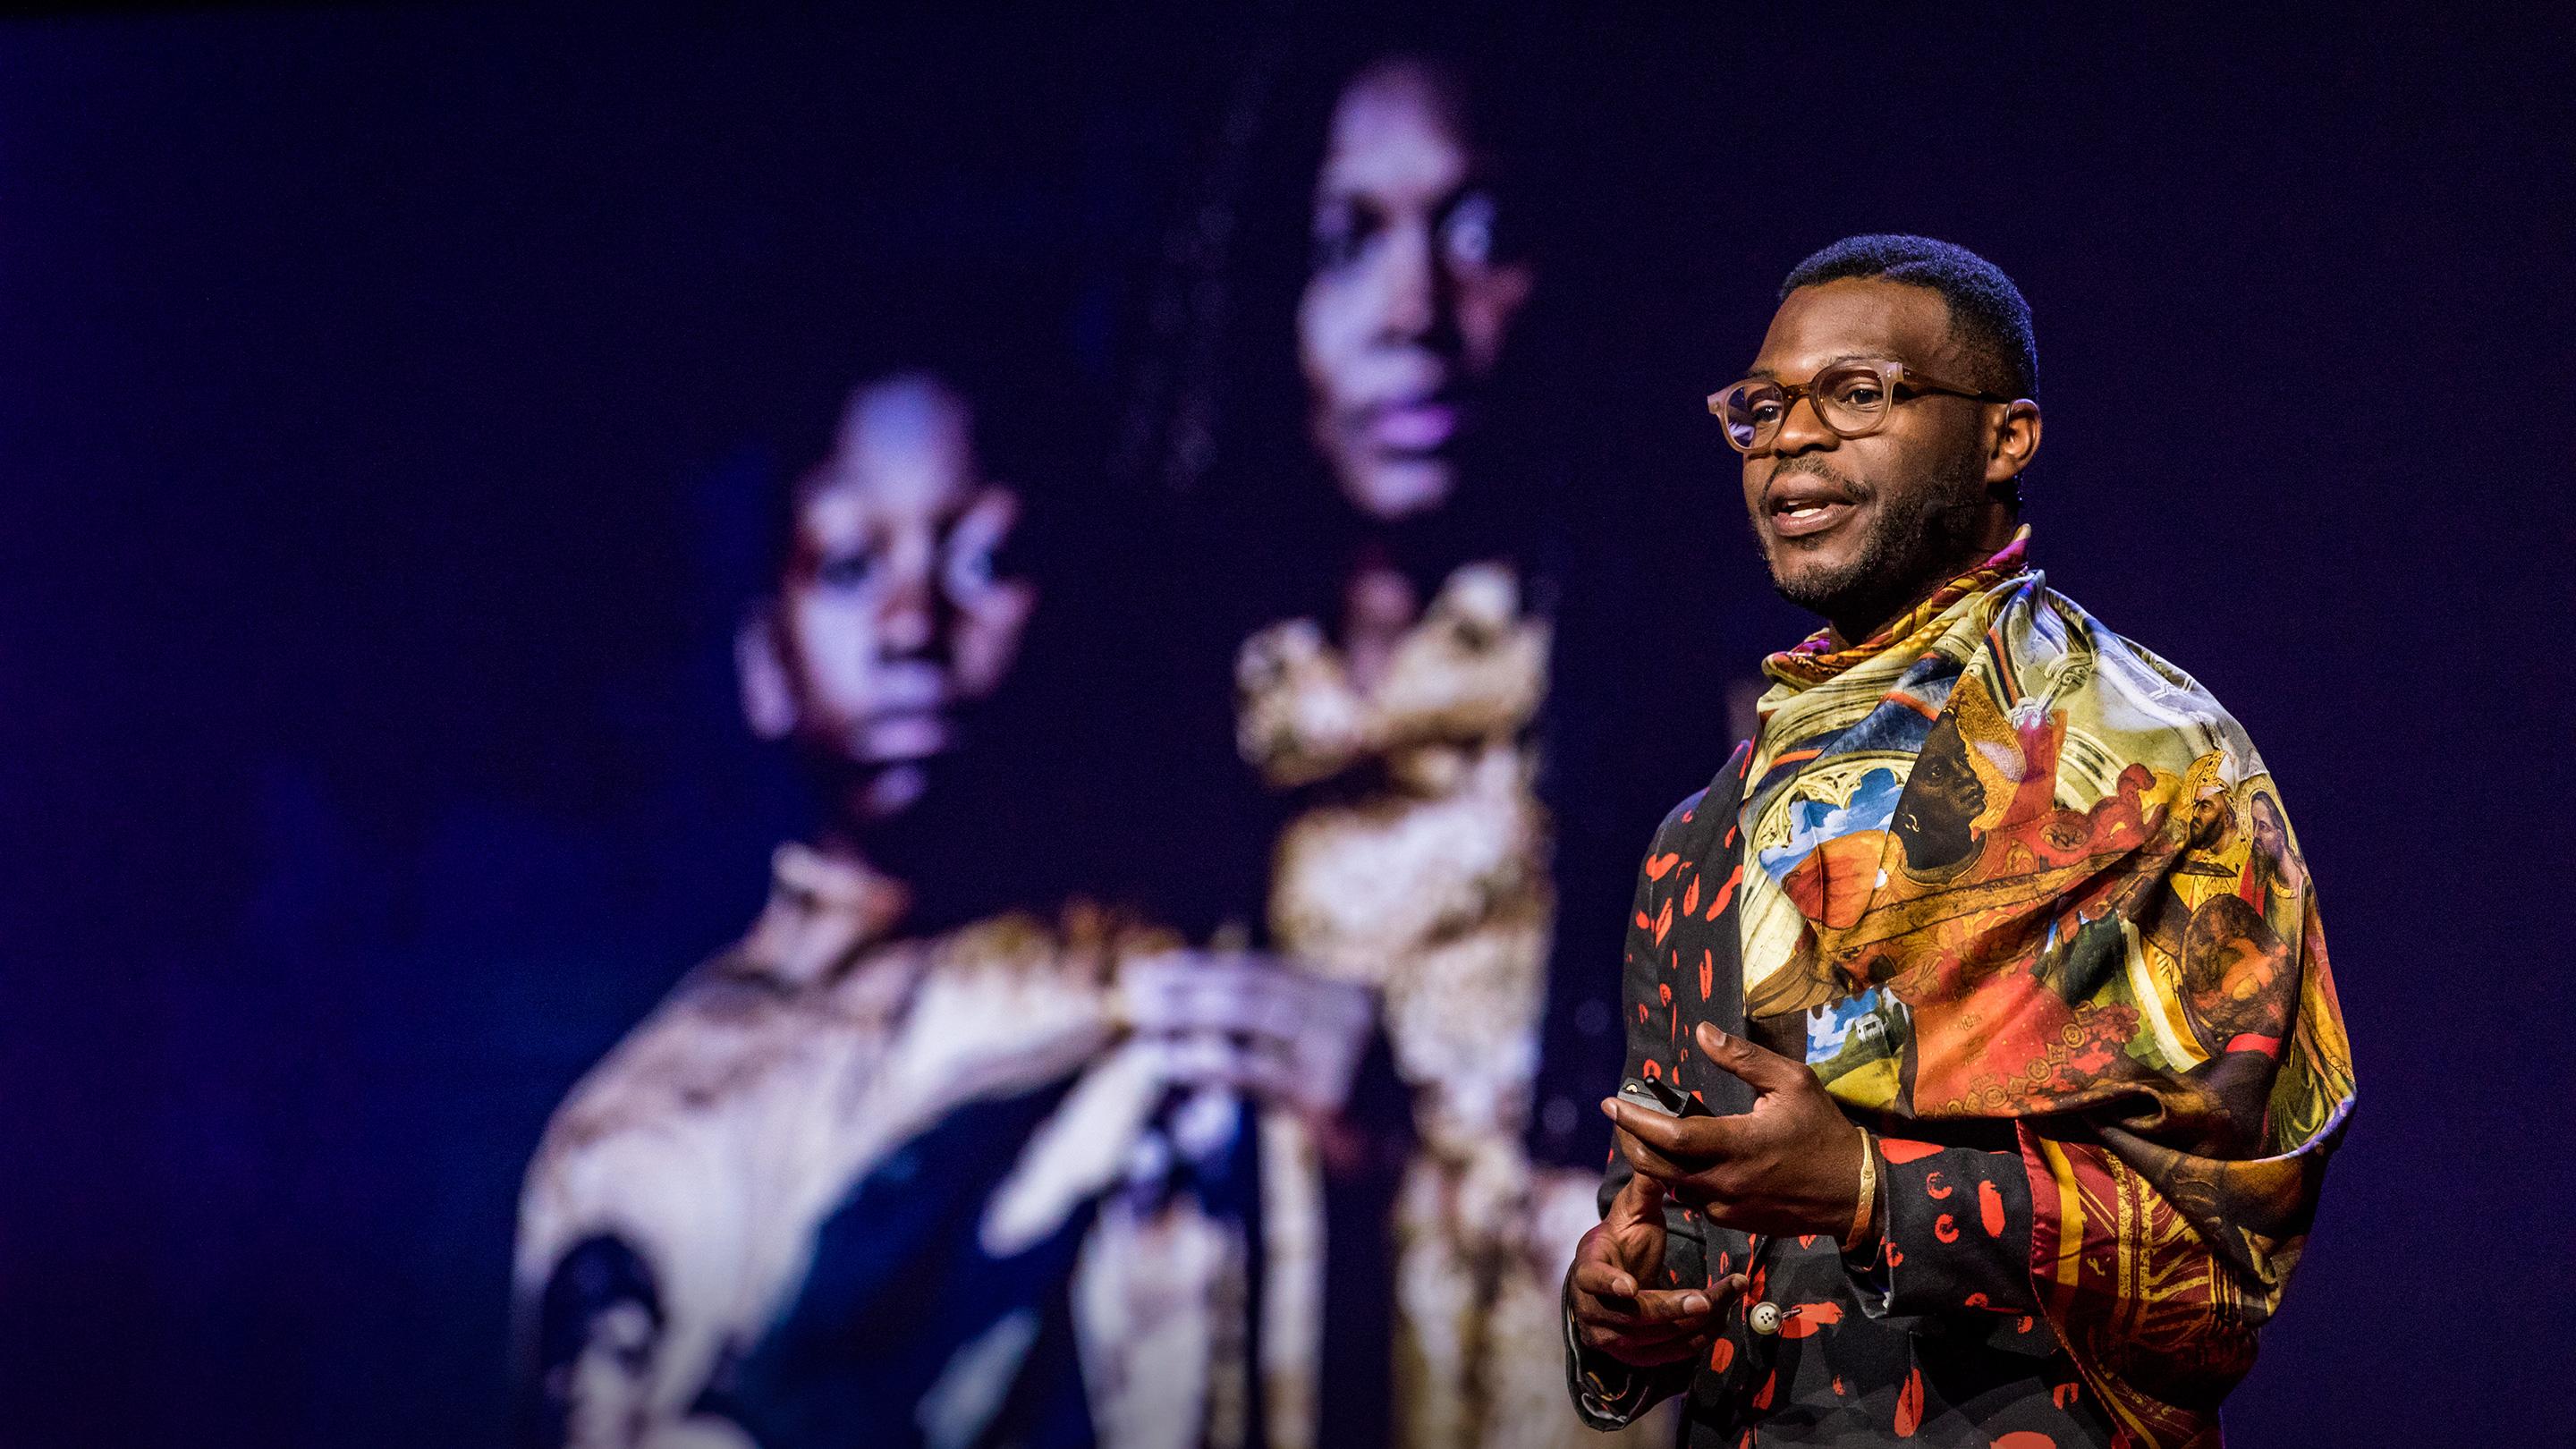 Fashion that celebrates African strength and spirit | Walé Oyéjidé